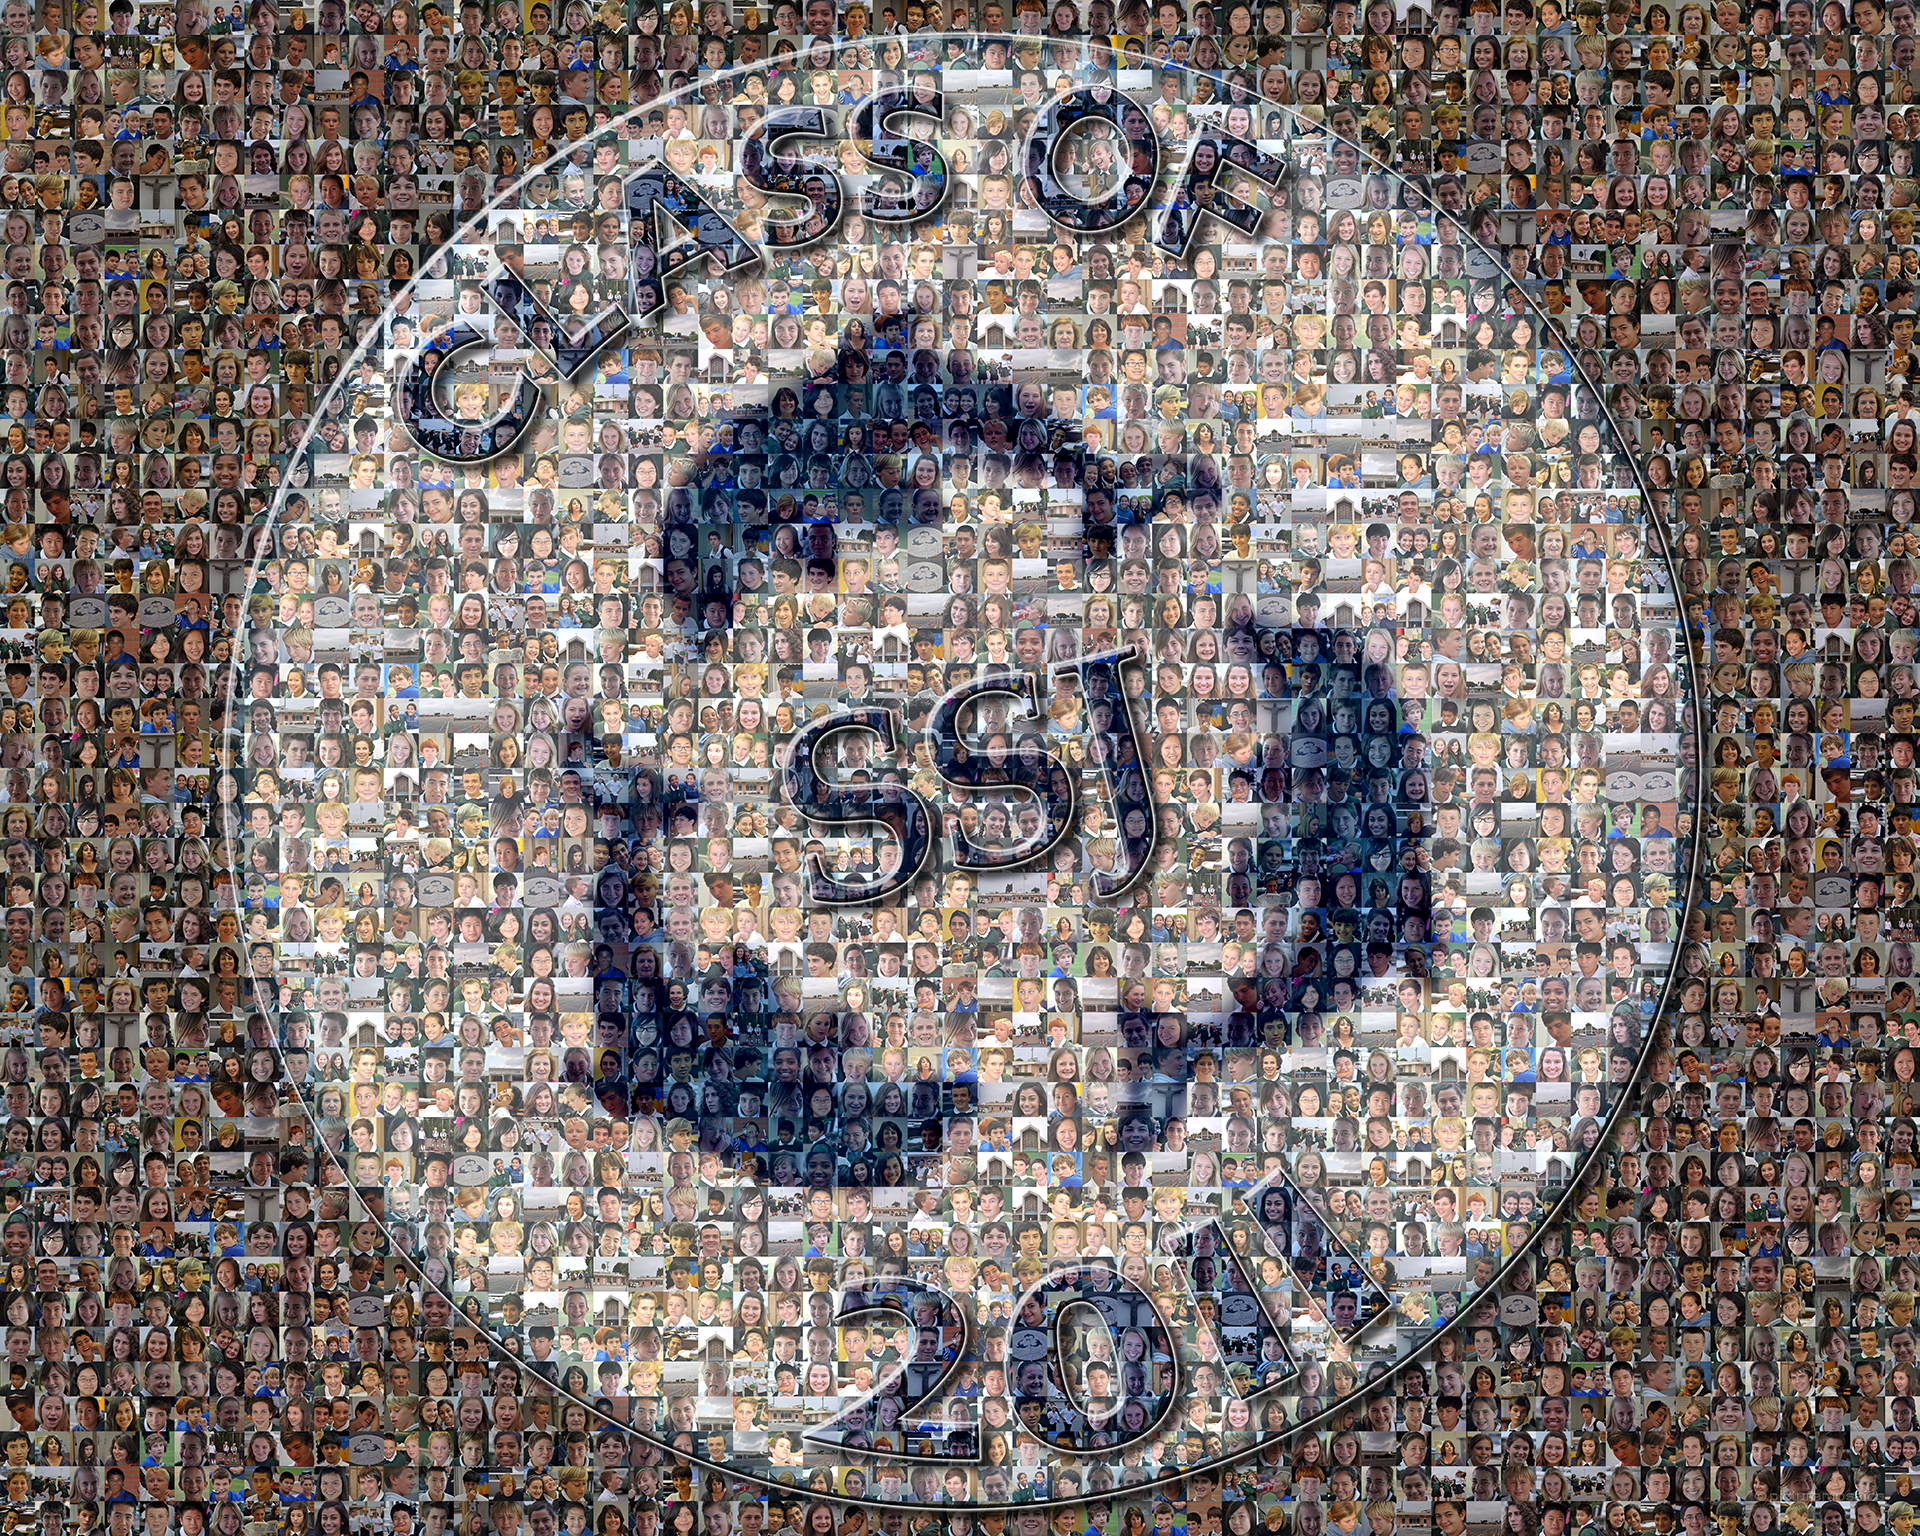 photo mosaic created using 270 school photos